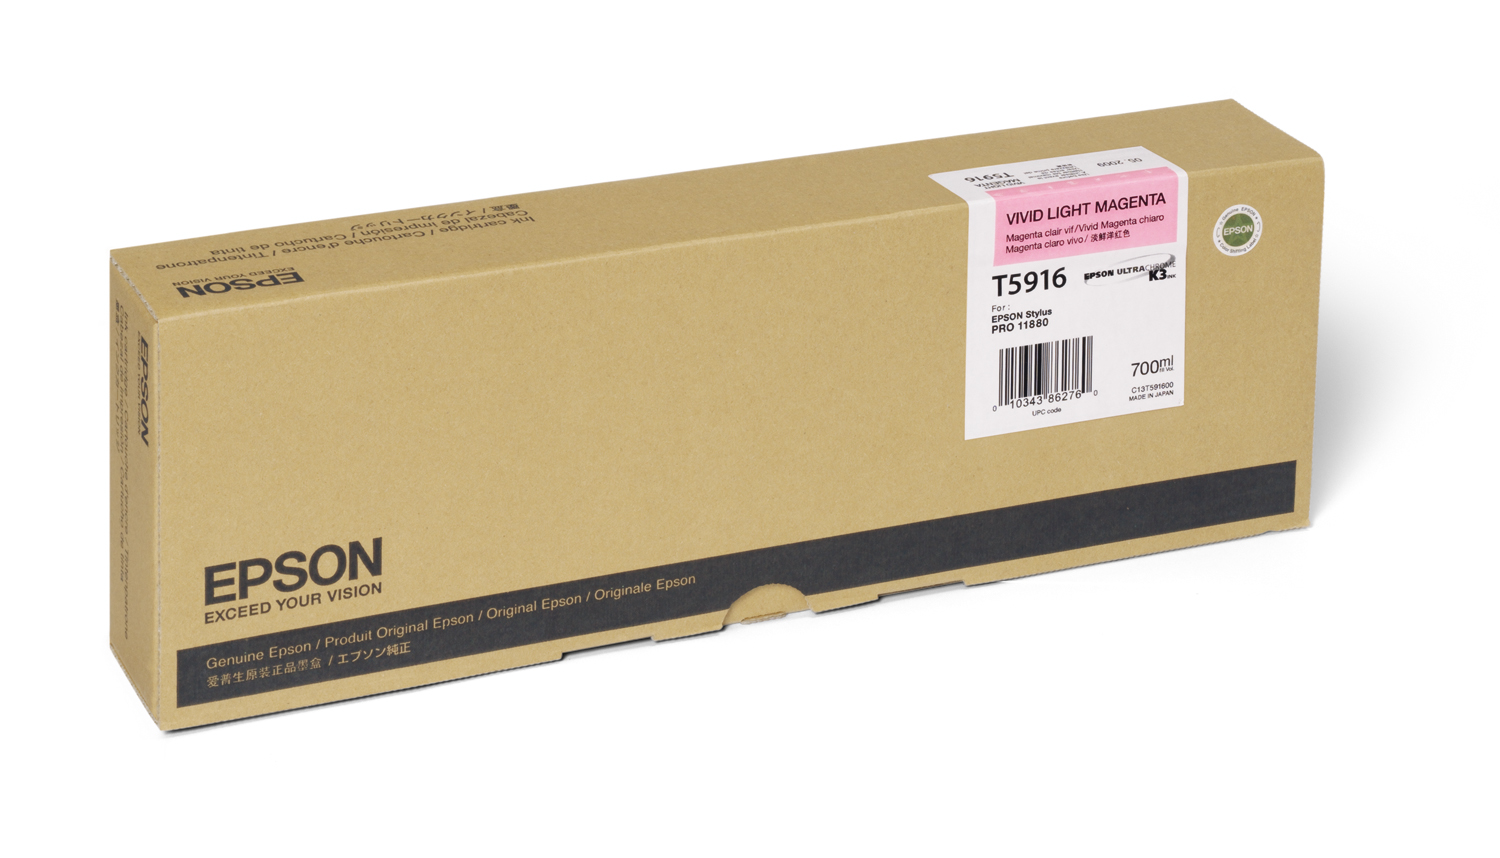 Epson 11880 Vivid Lt Magenta Ink (700ml) (T591600)